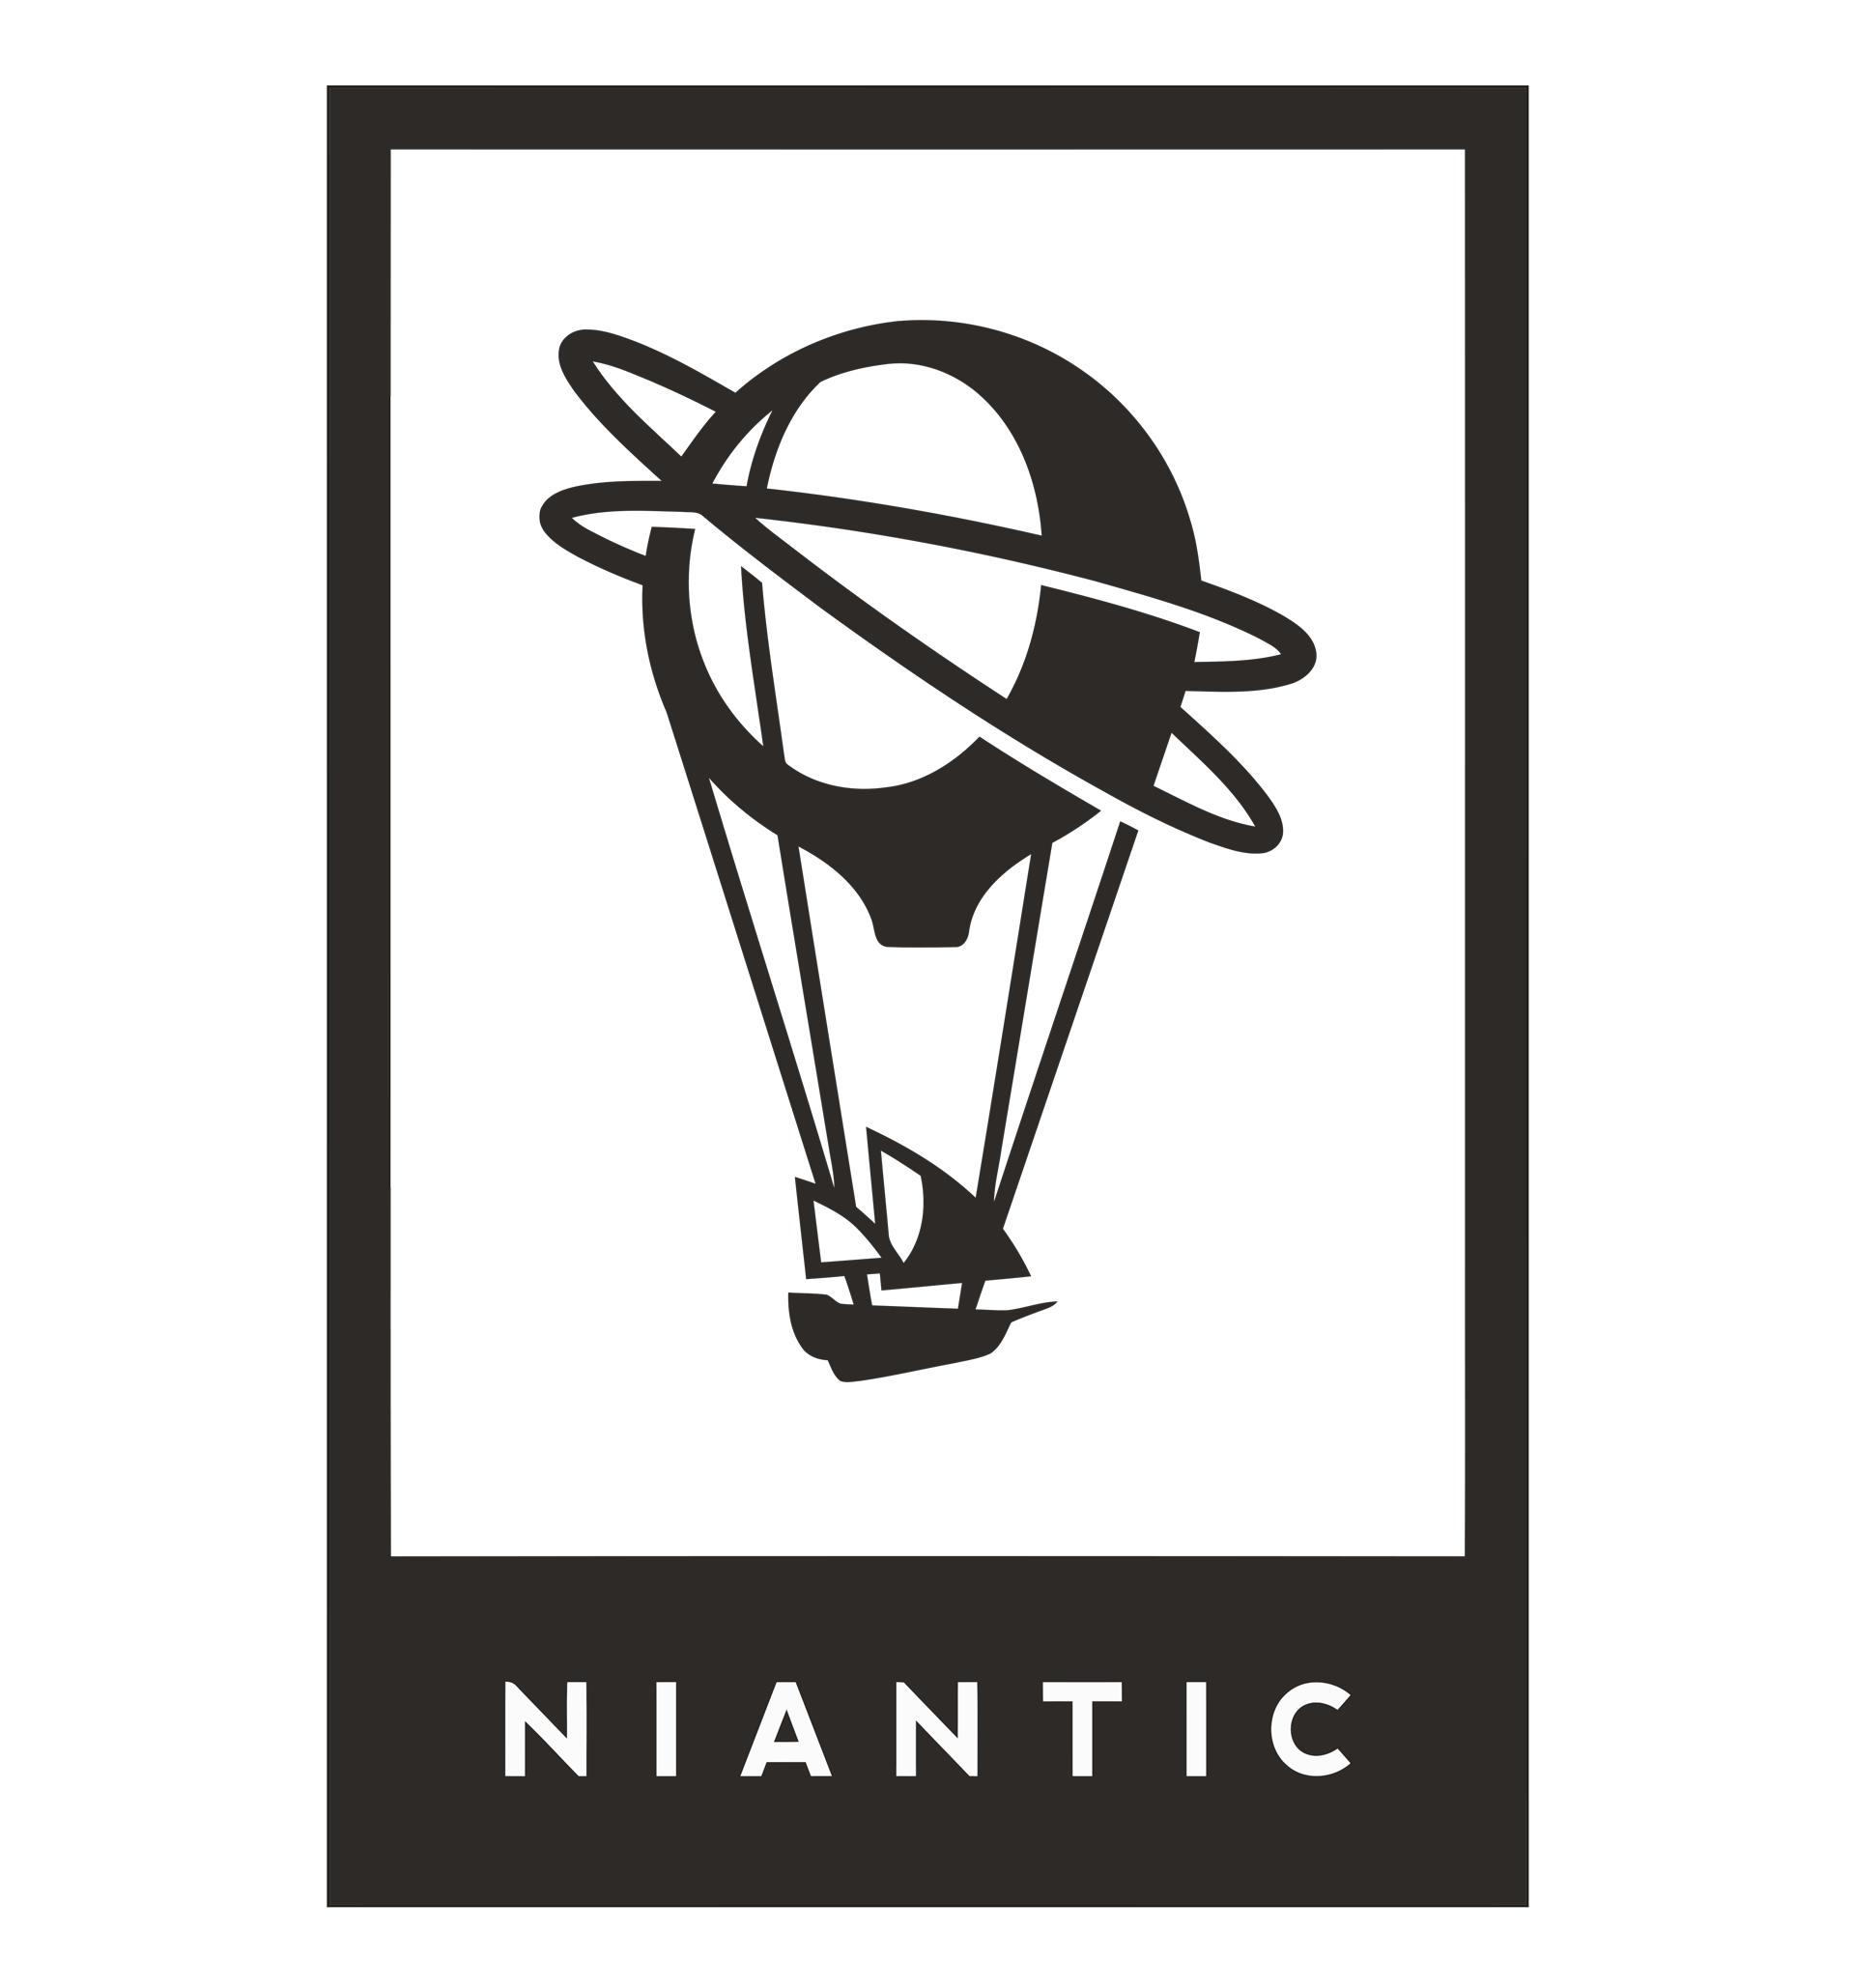 Niantic logo png